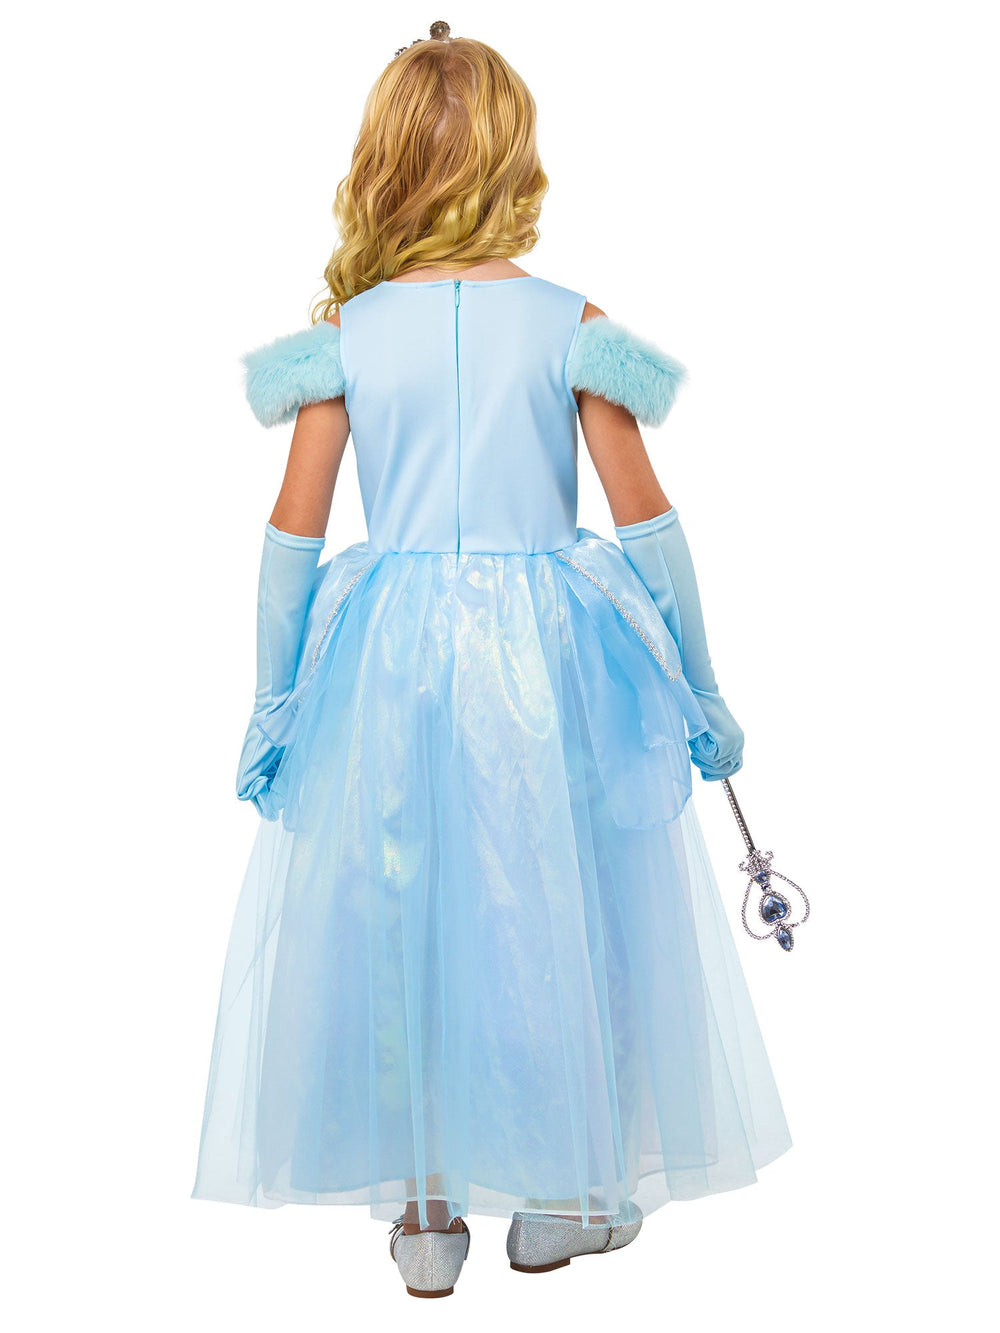 Kids Blue Princess Costume Medieval Royalty Dress_2